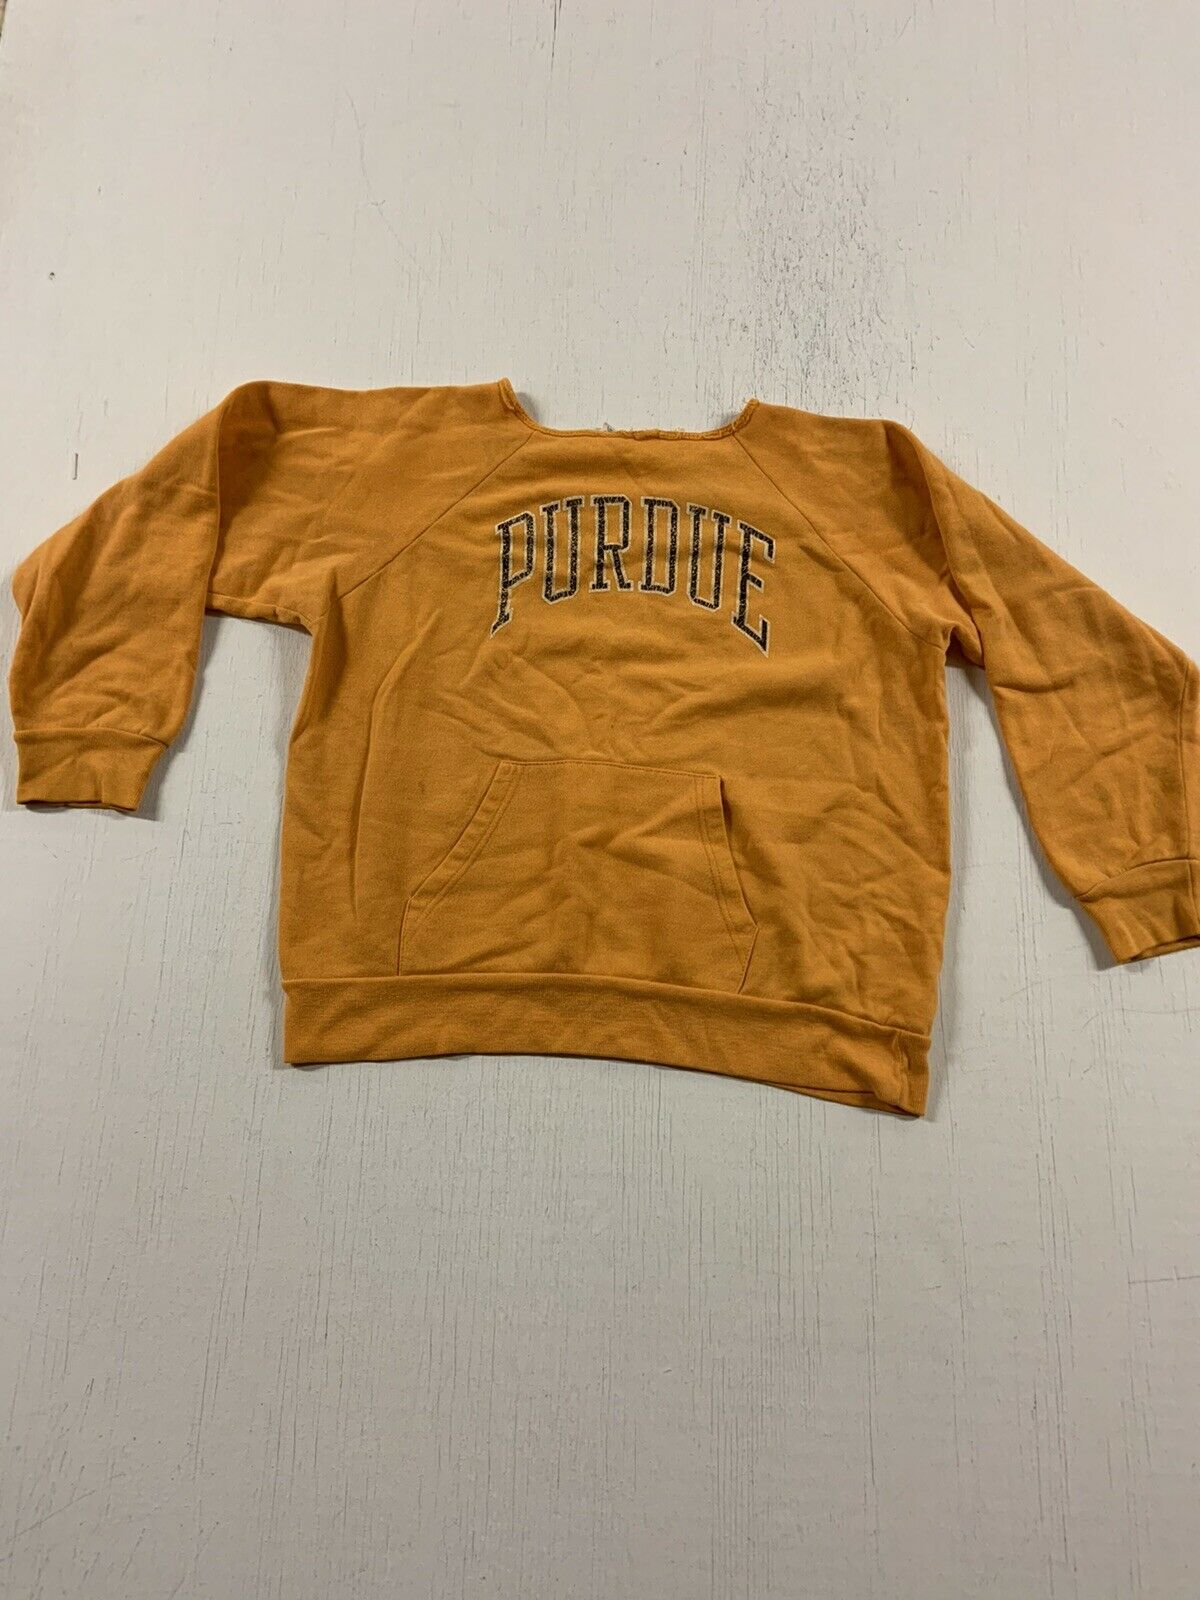 Vintage 1980’s Gold Purdue Sweatshirt (by Champion) Large Vintage